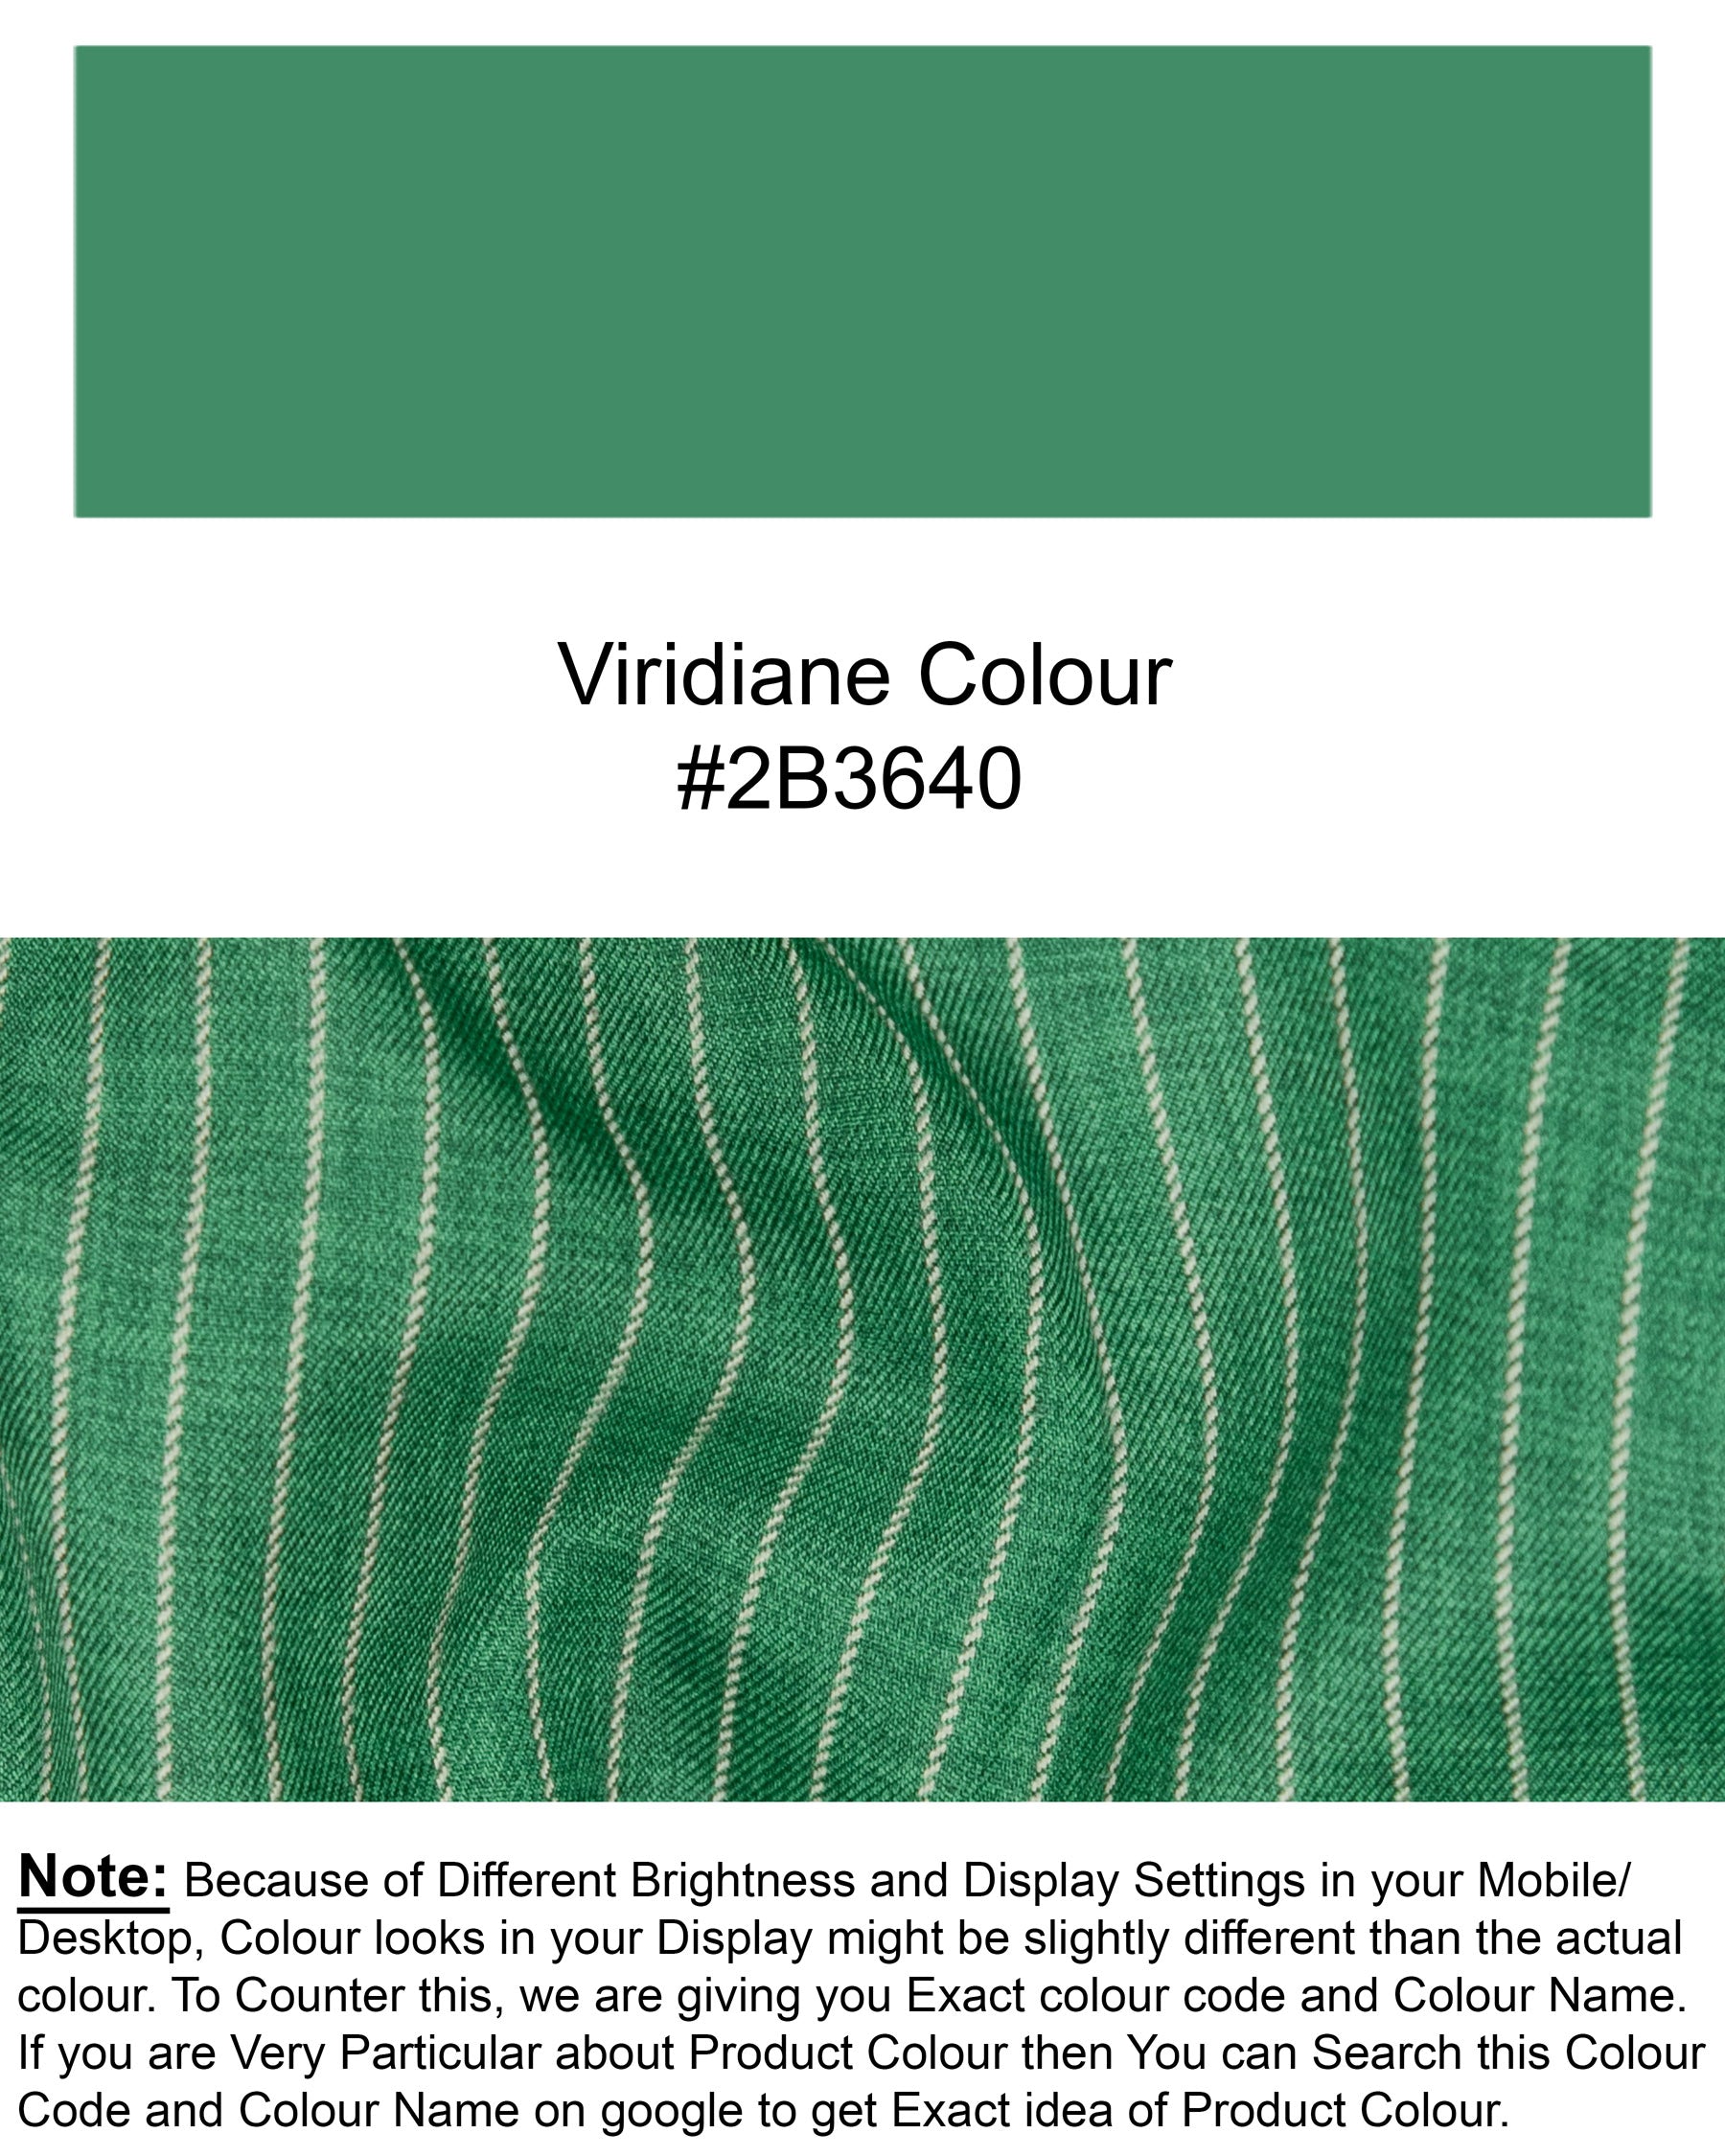 Viridian Green Striped Woolrich Blazer BL1295-SB-36, BL1295-SB-38, BL1295-SB-40, BL1295-SB-42, BL1295-SB-44, BL1295-SB-48, BL1295-SB-46, BL1295-SB-50, BL1295-SB-52, BL1295-SB-54, BL1295-SB-56, BL1295-SB-58, BL1295-SB-60